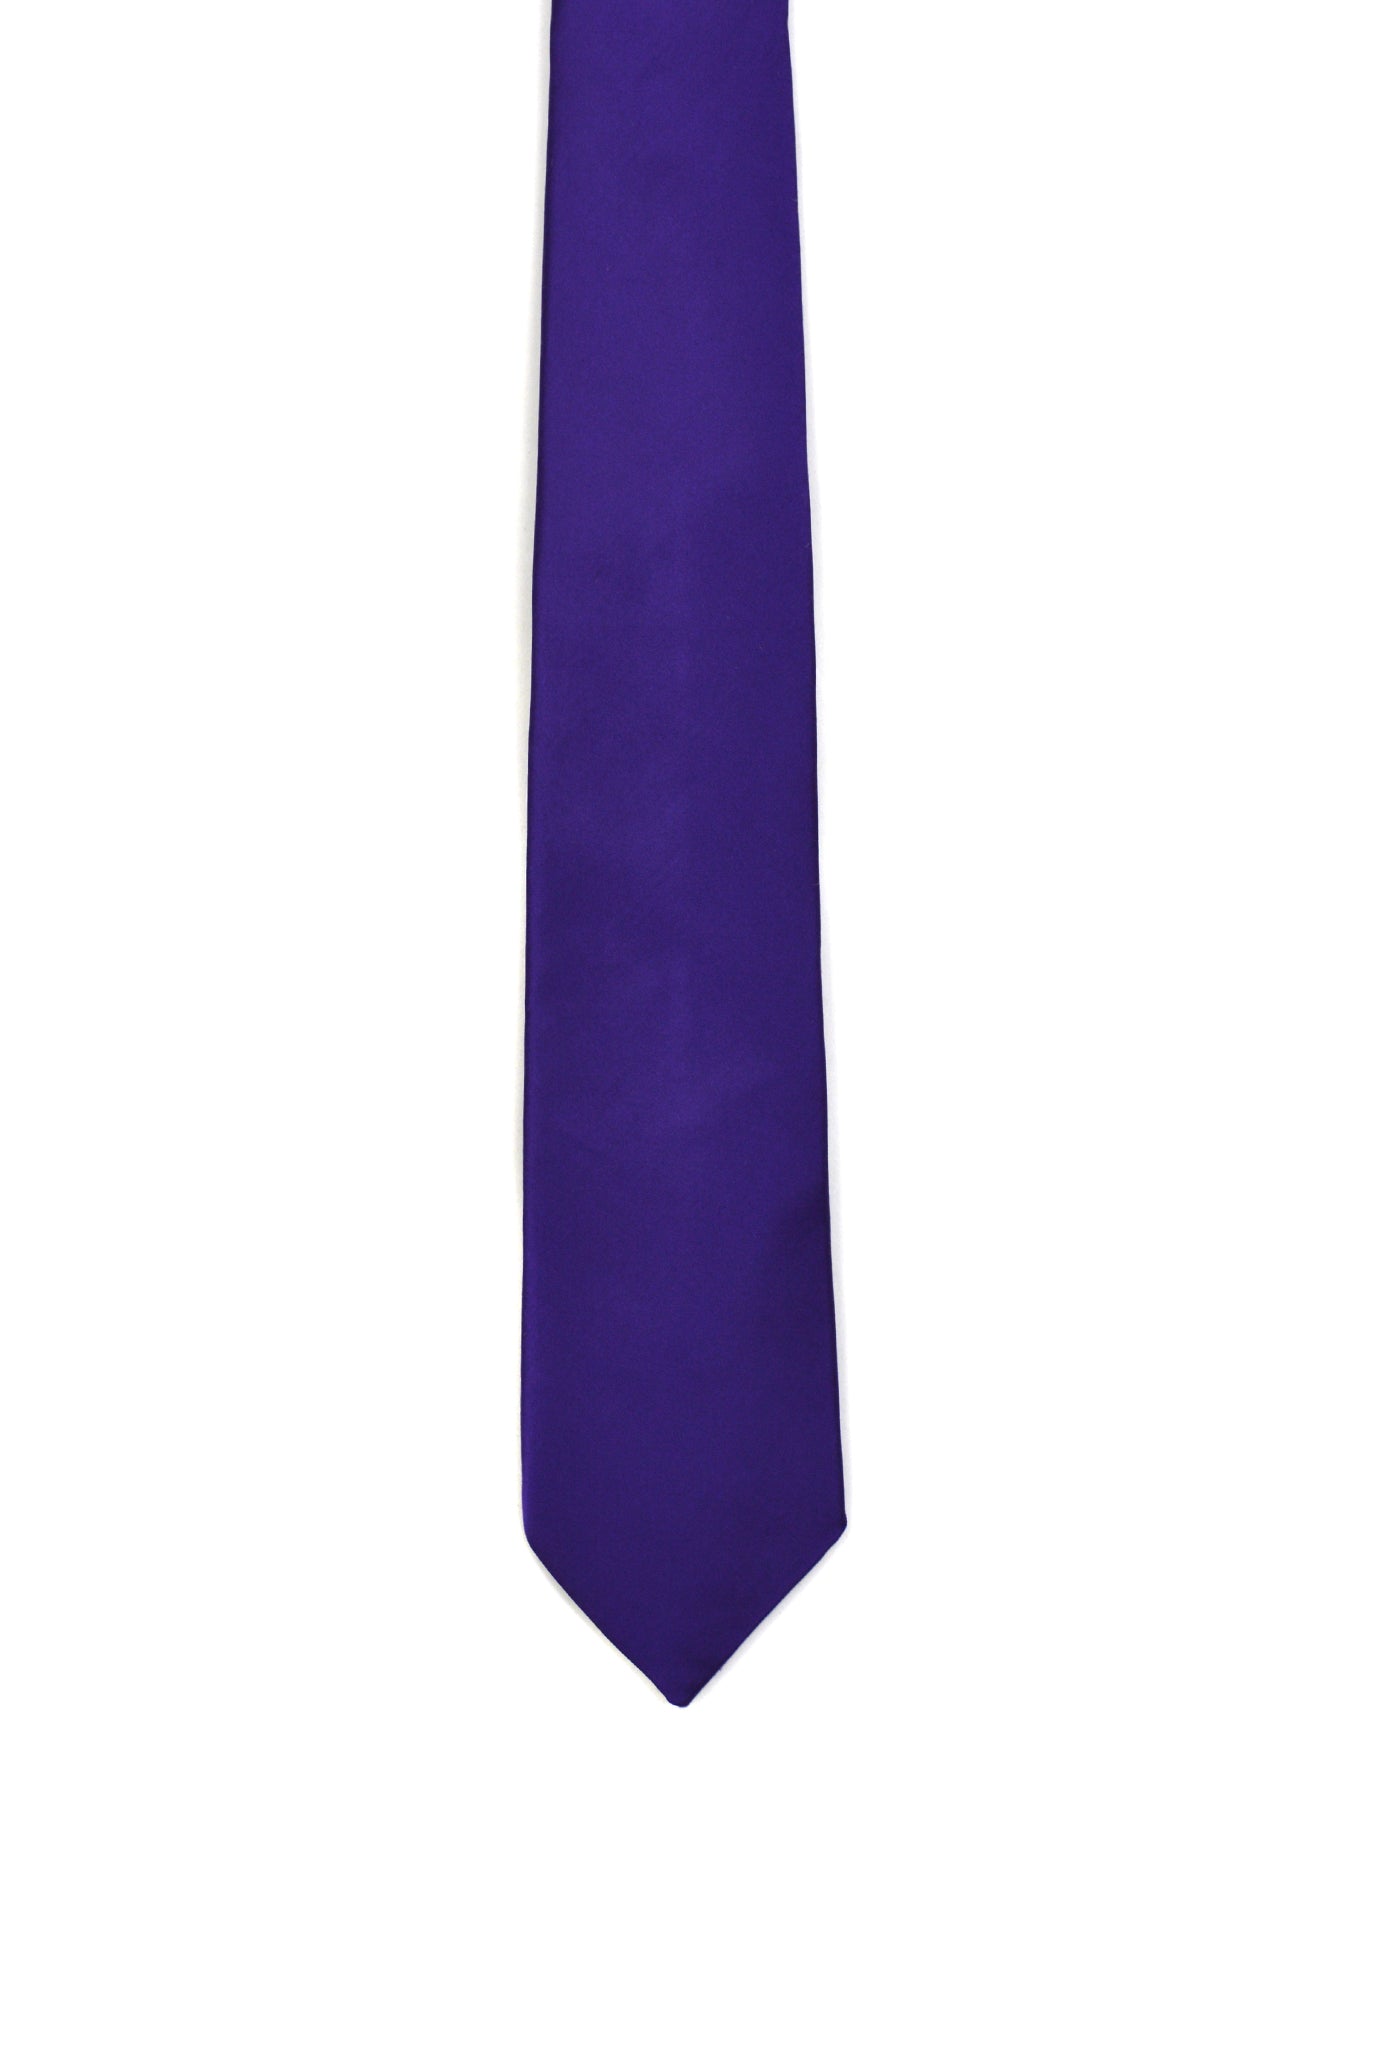 Ernest W. Baker Satin Tie, Purple